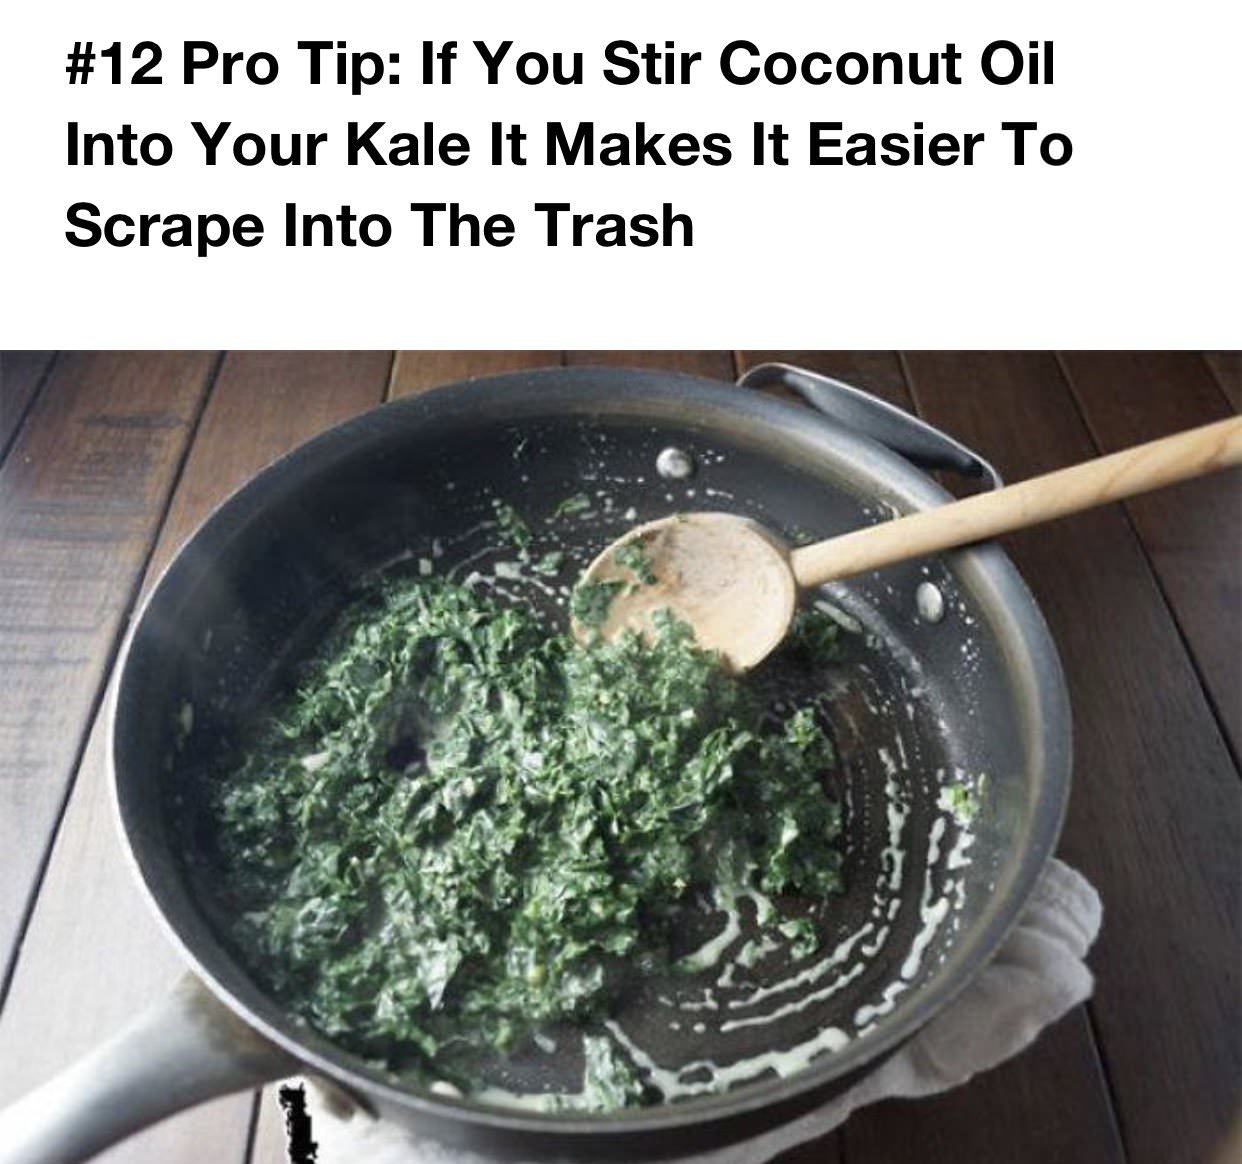 stir coconut oil into kale - Pro Tip If You Stir Coconut Oil Into Your Kale It Makes It Easier To Scrape Into The Trash